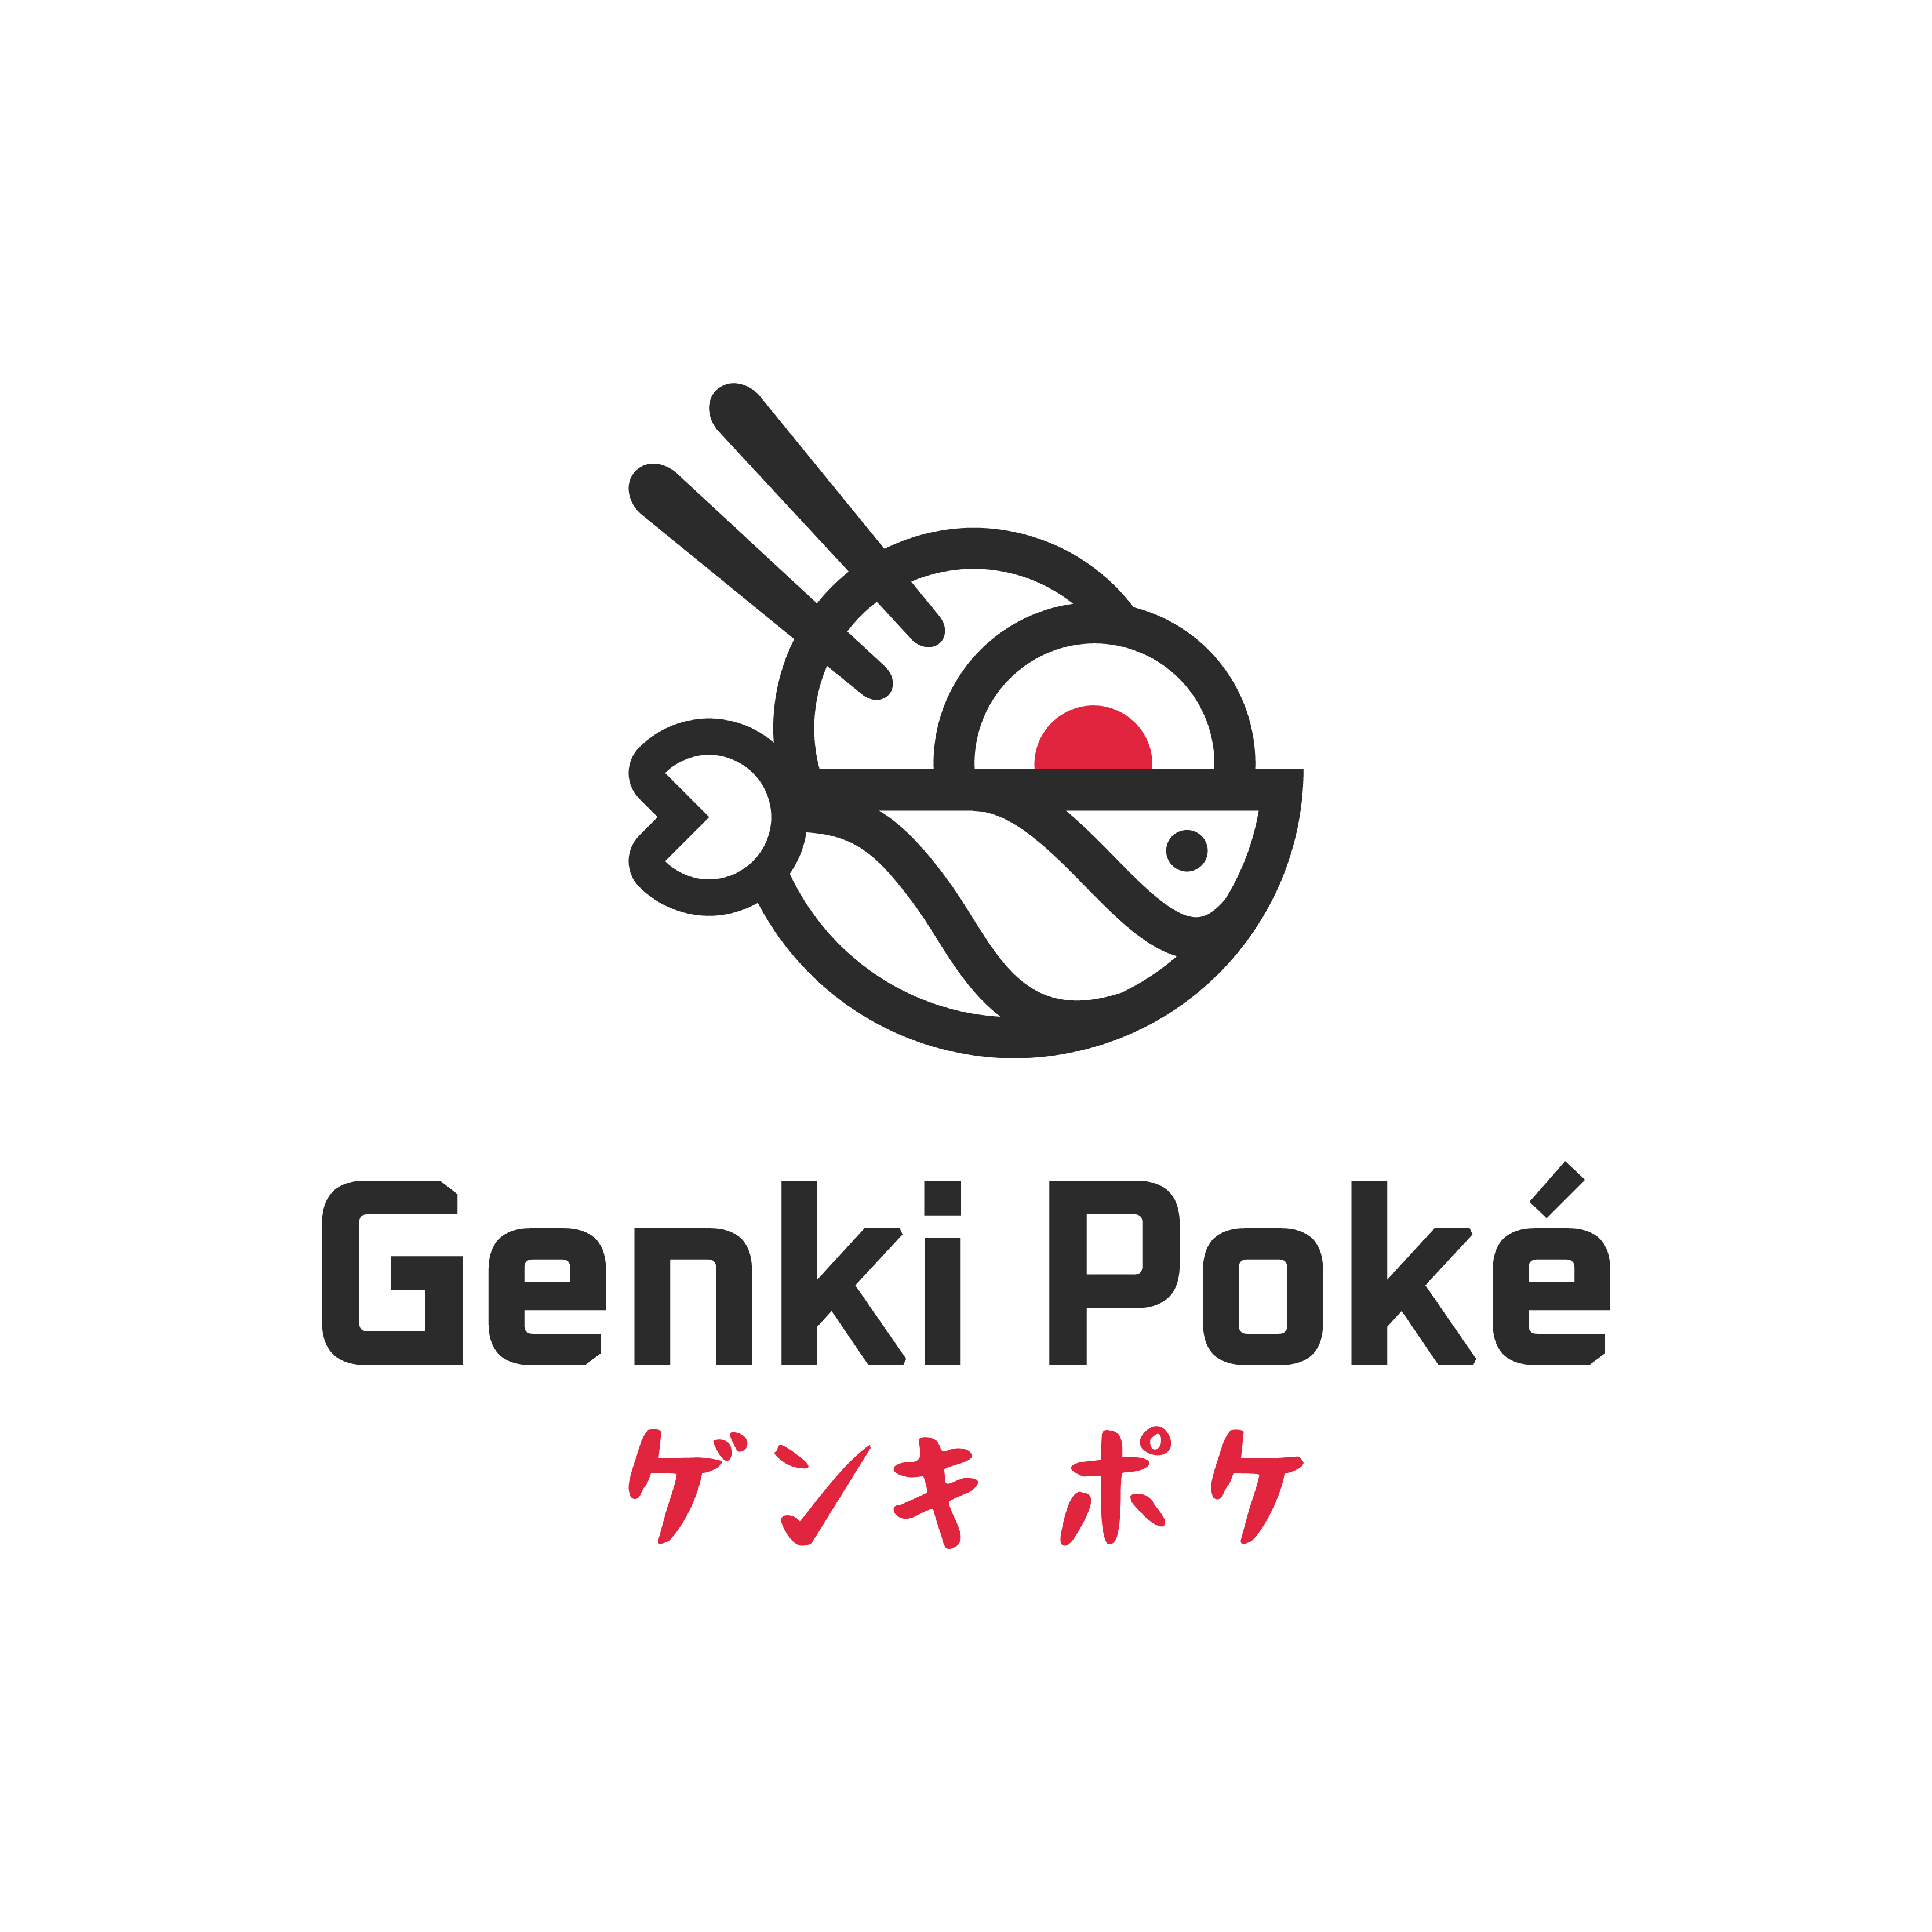 Genki Poke